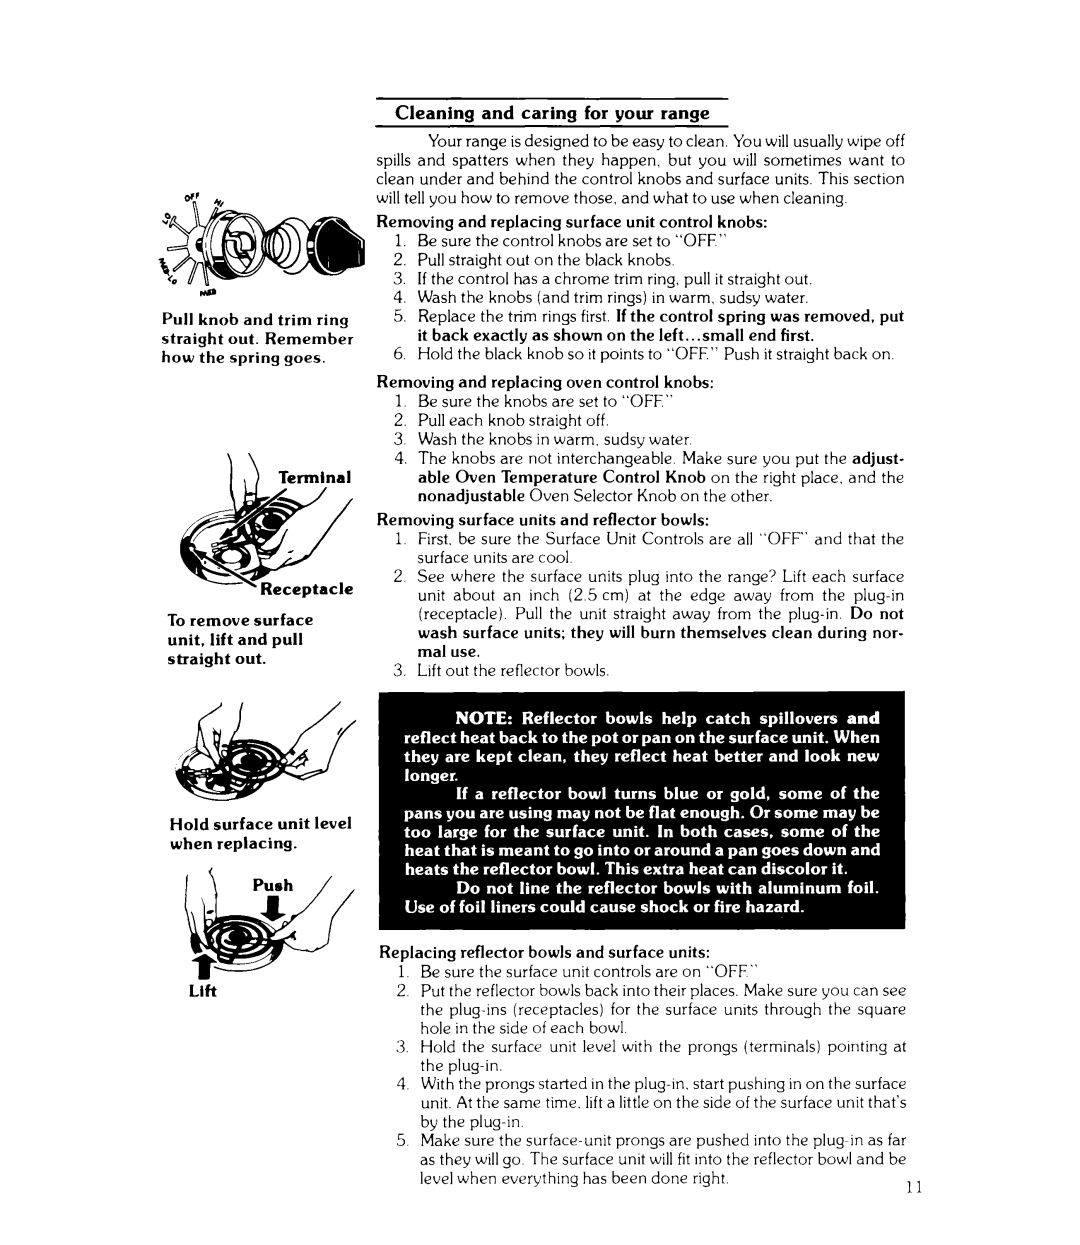 Whirlpool RJE-340P manual I$1Termlnal 